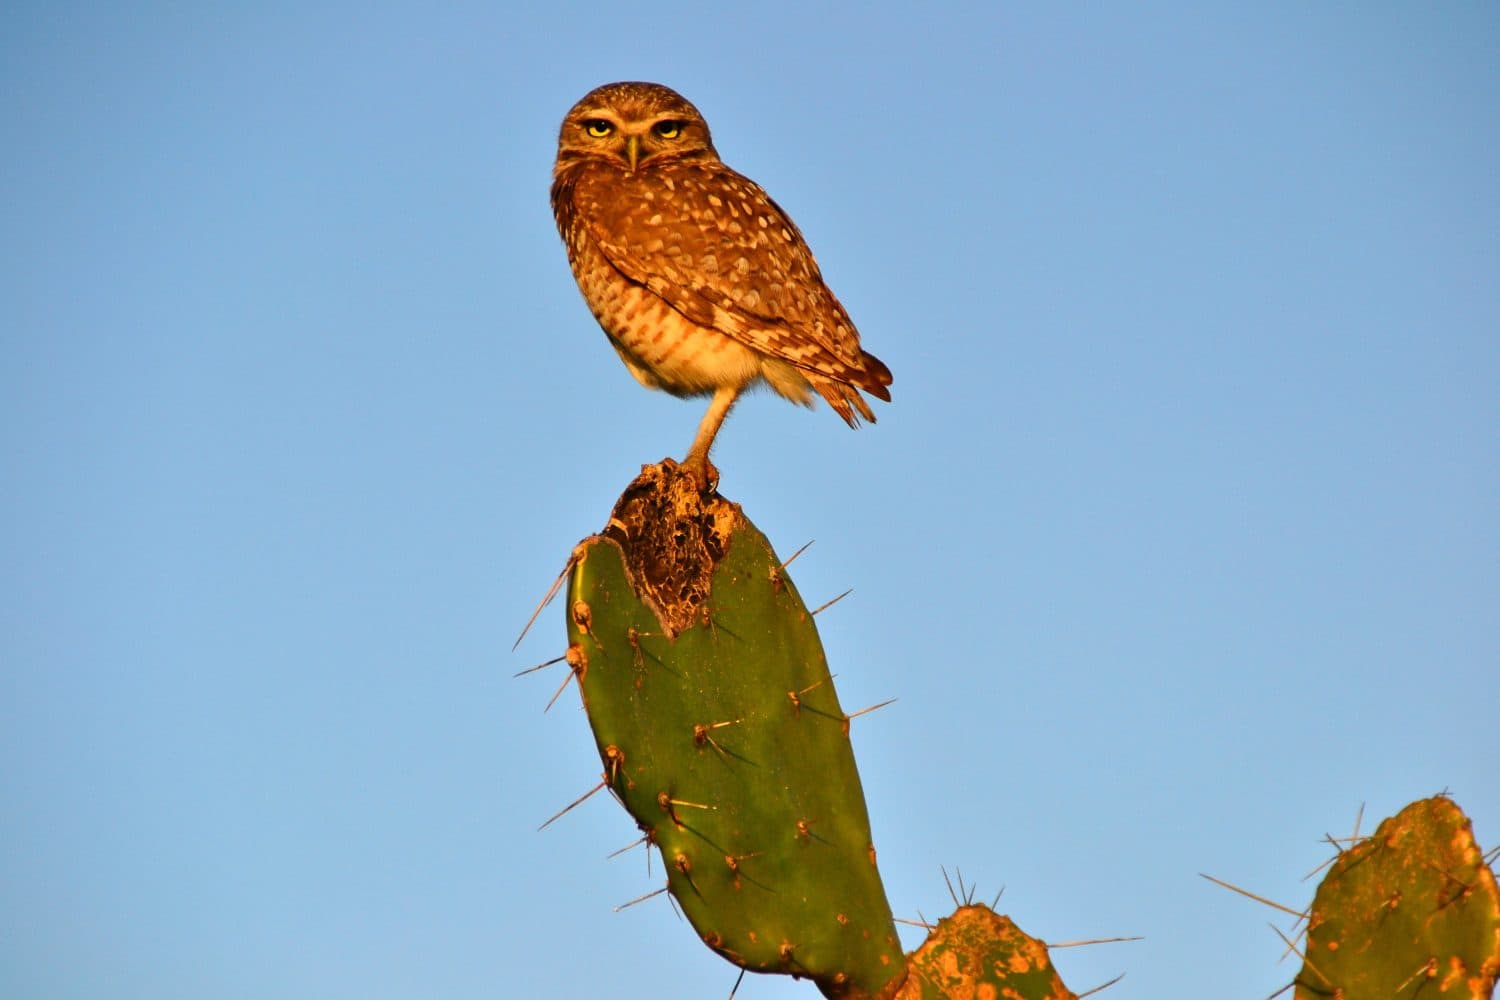 Pygmy Owl in Brazil